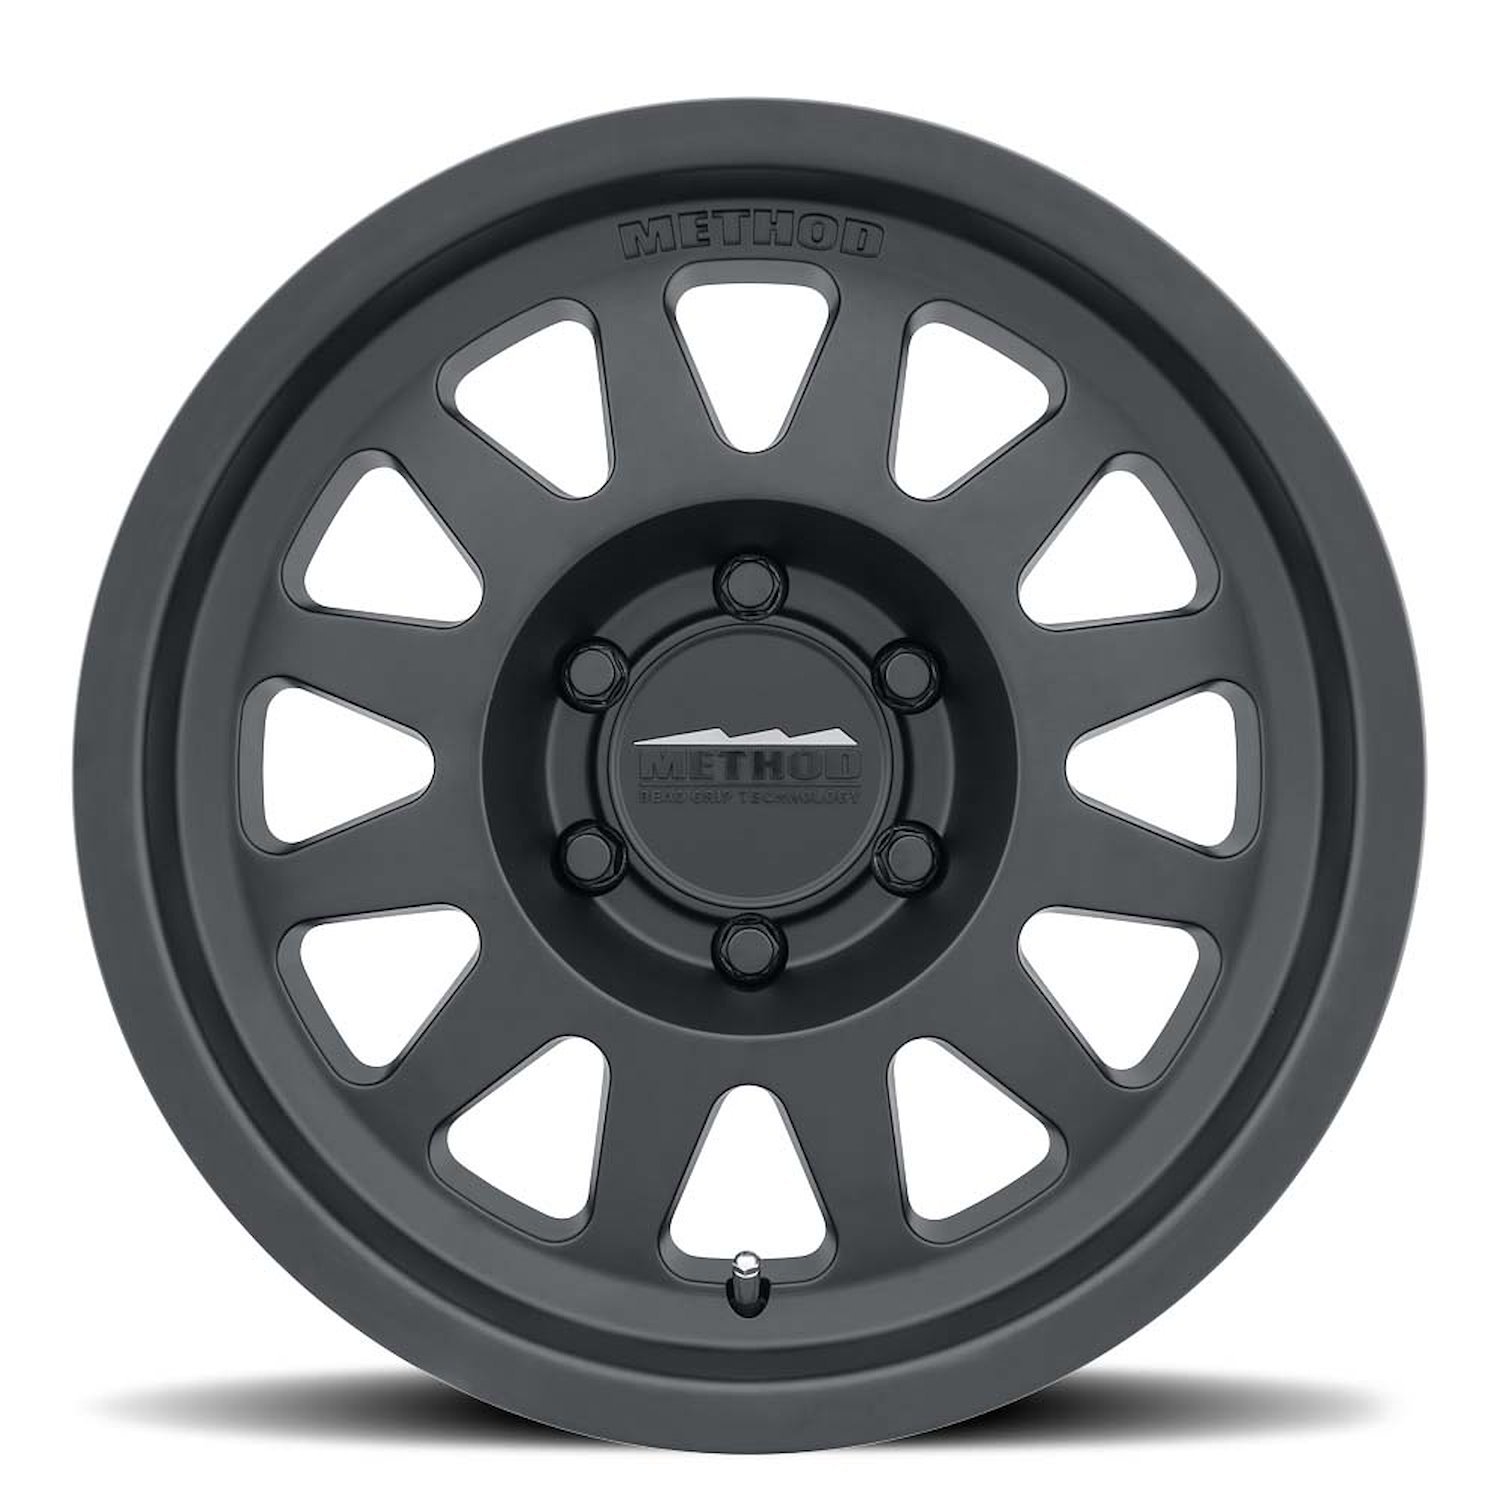 MR70478560500 TRAIL MR704 Bead Grip Wheel [Size: 17" x 8.5"] Matte Black